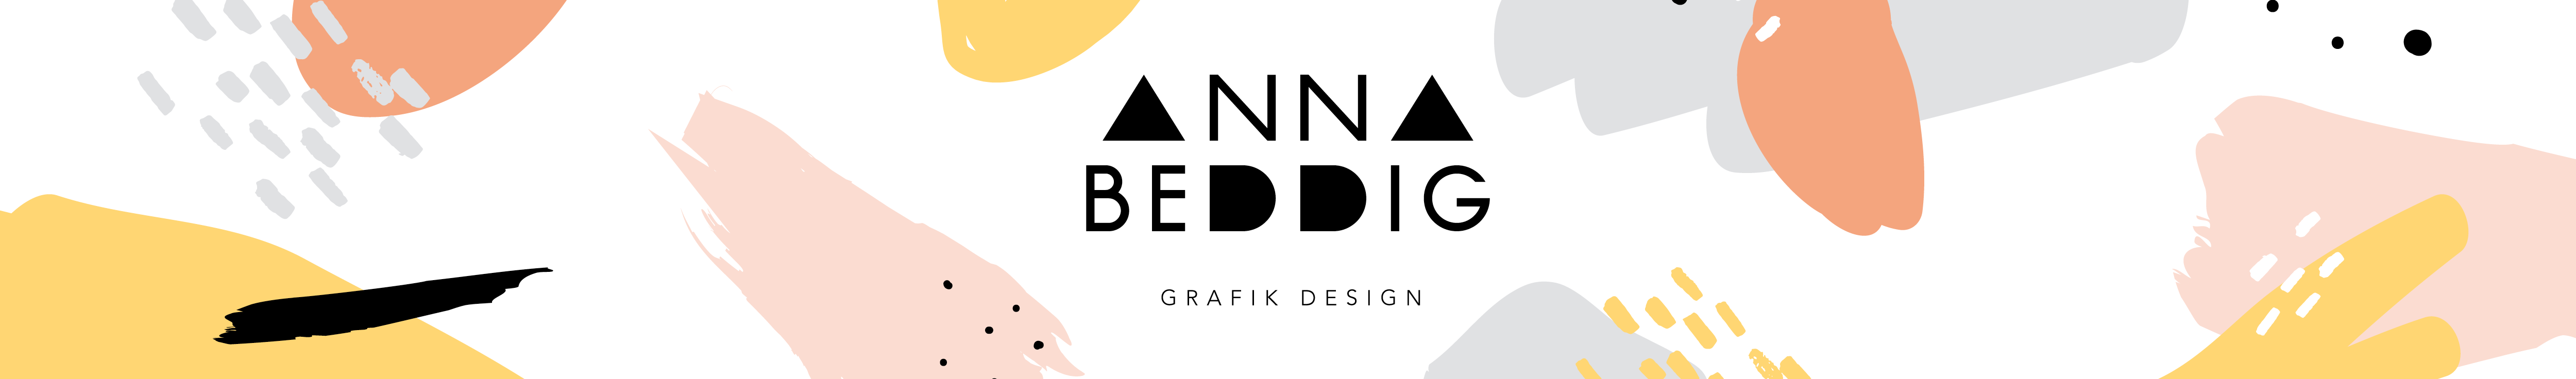 Anna Beddig's profile banner